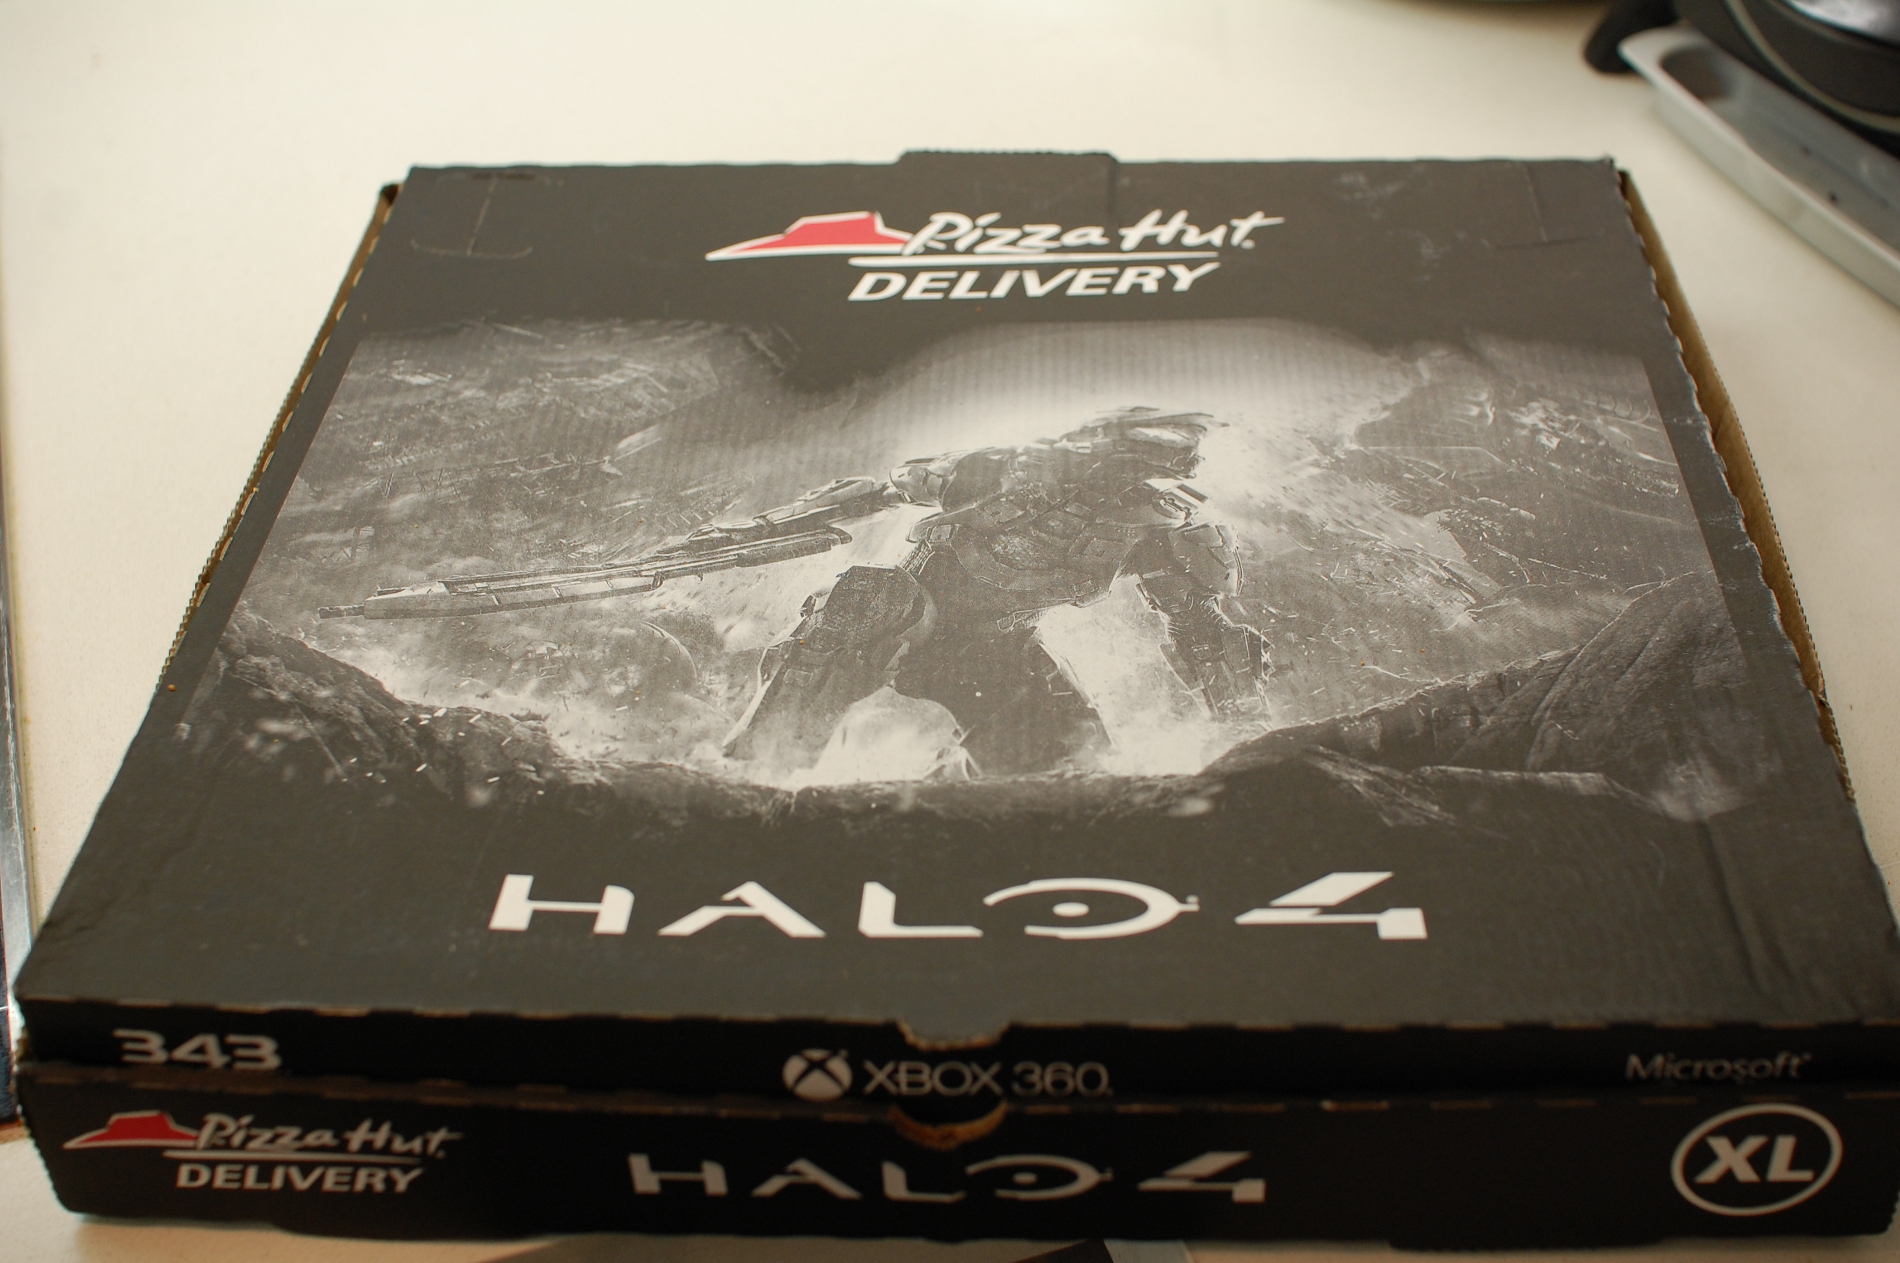 Halo-4-Stuffed-Crust-Pizza-The-Box.jpg